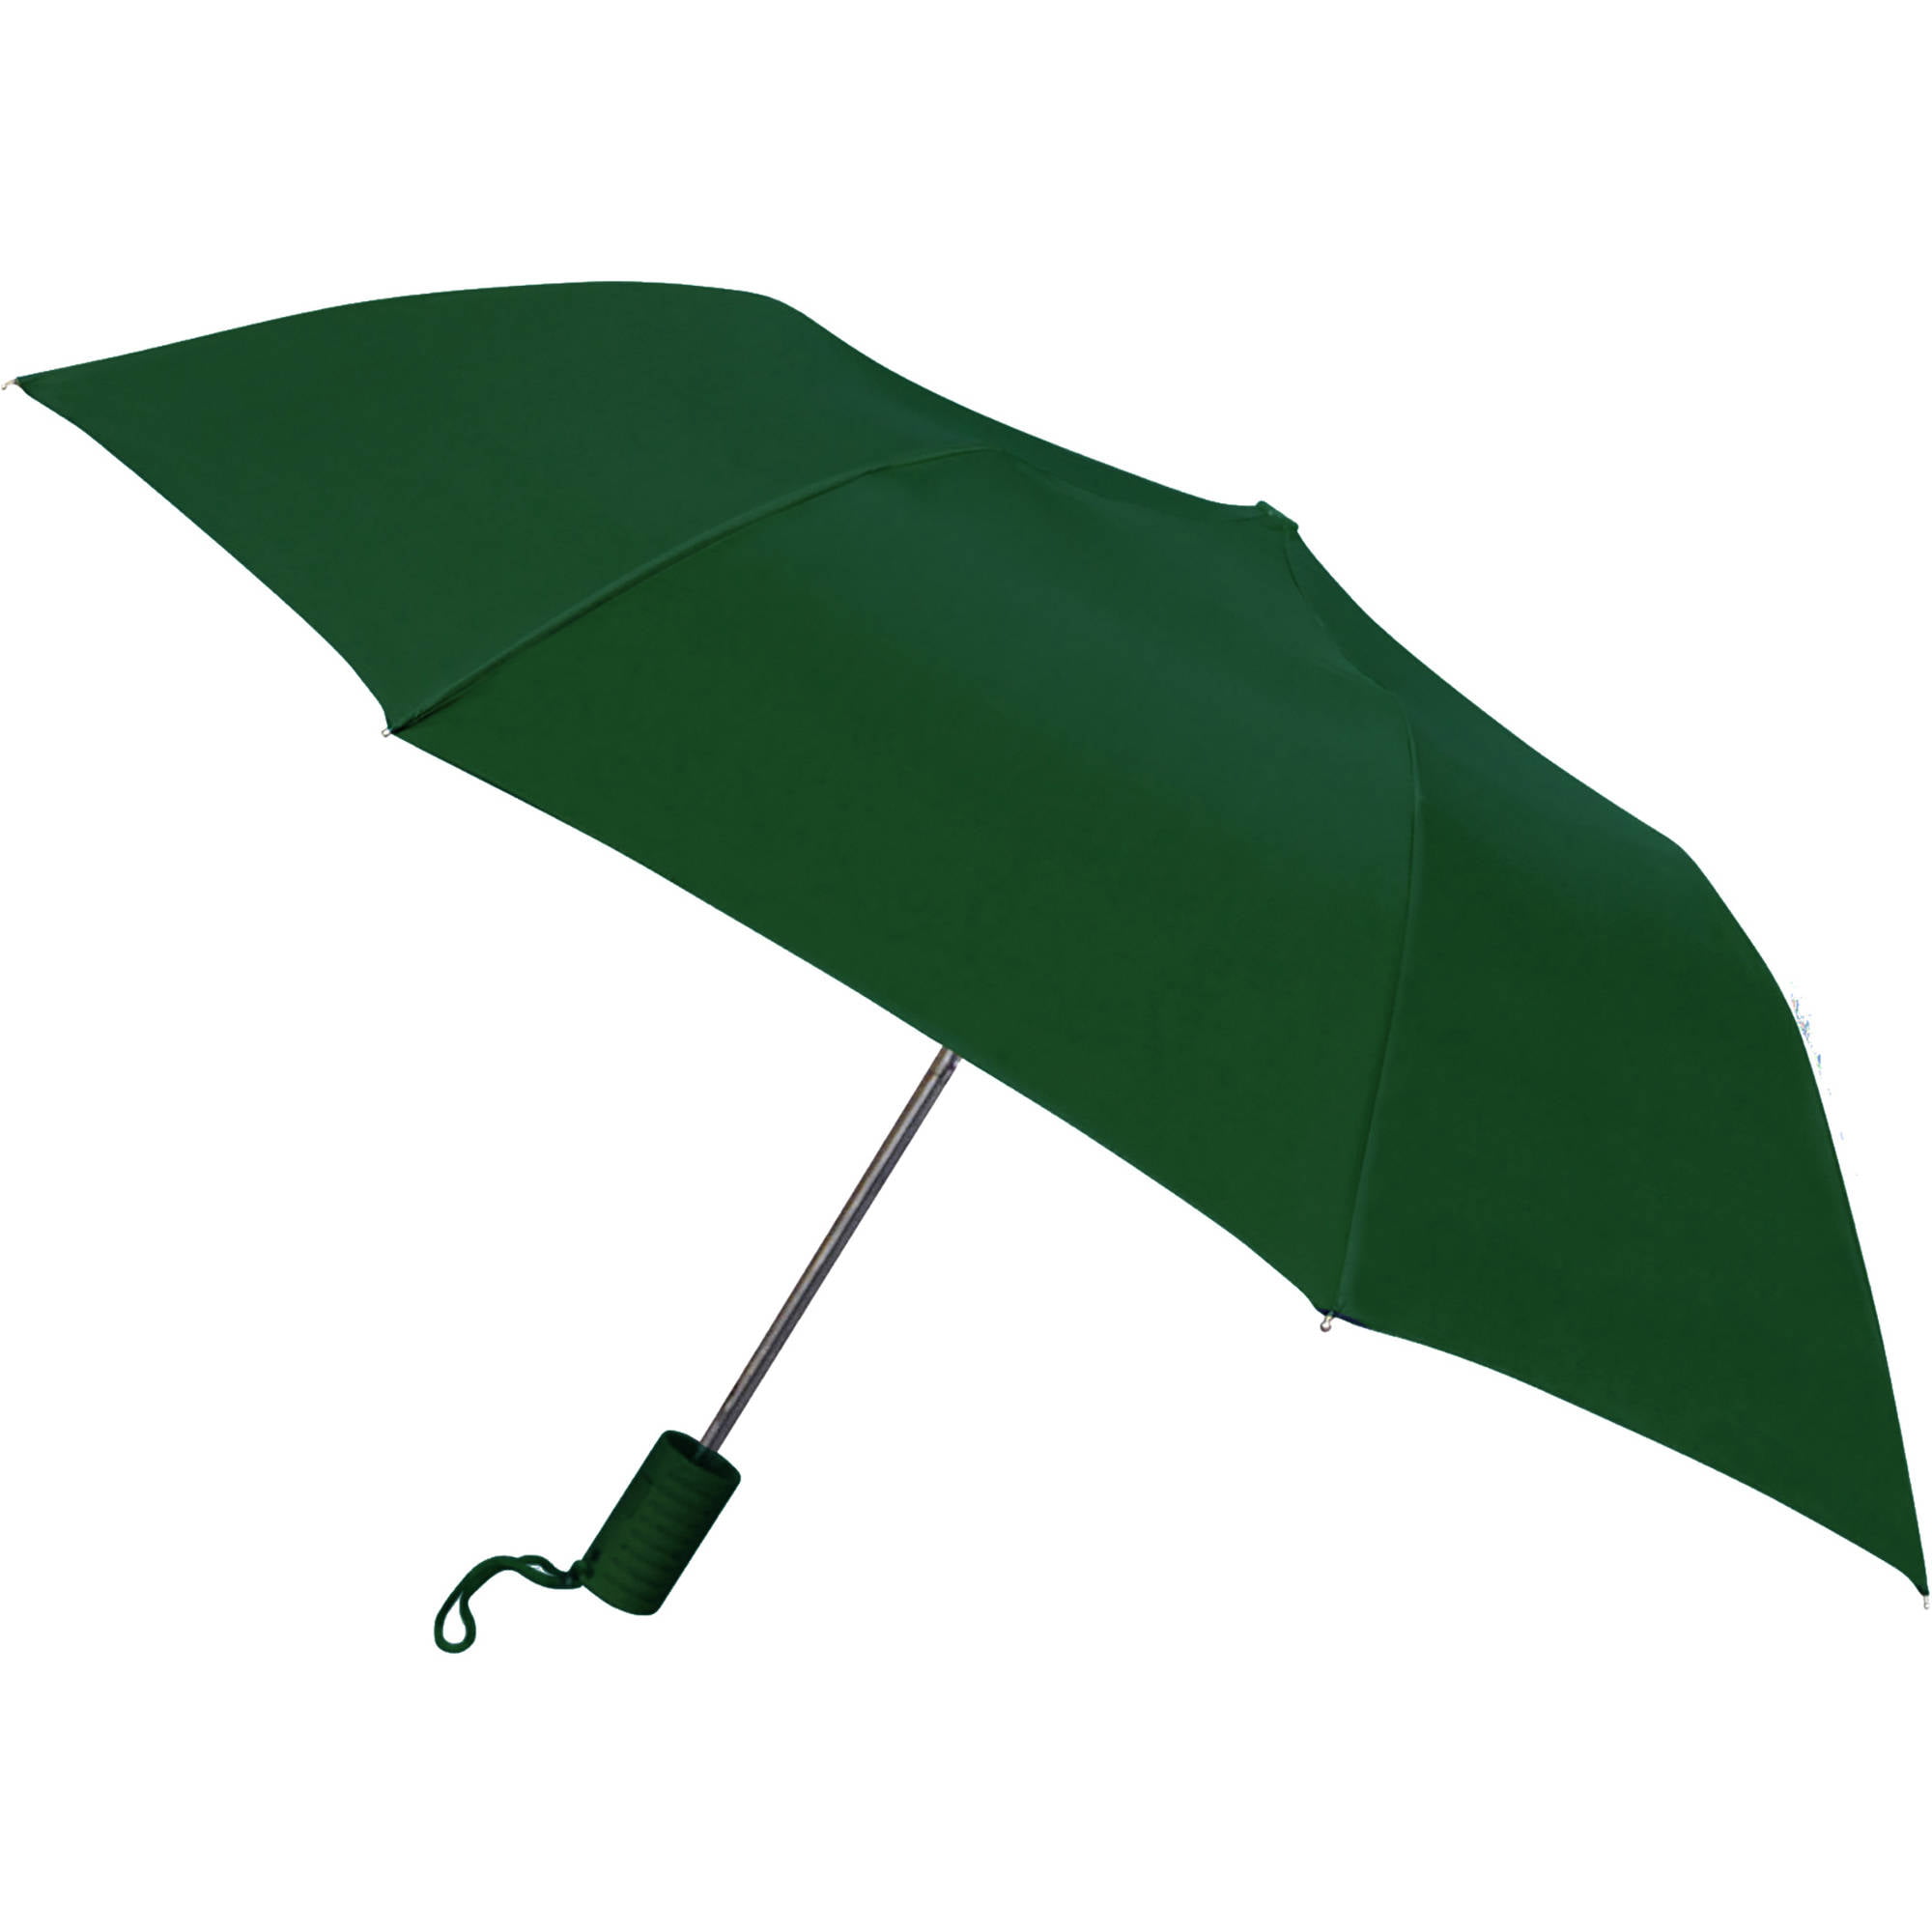 Easters Day Gift Basketball Compact Foldable Rainproof Windproof Travel Umbrella